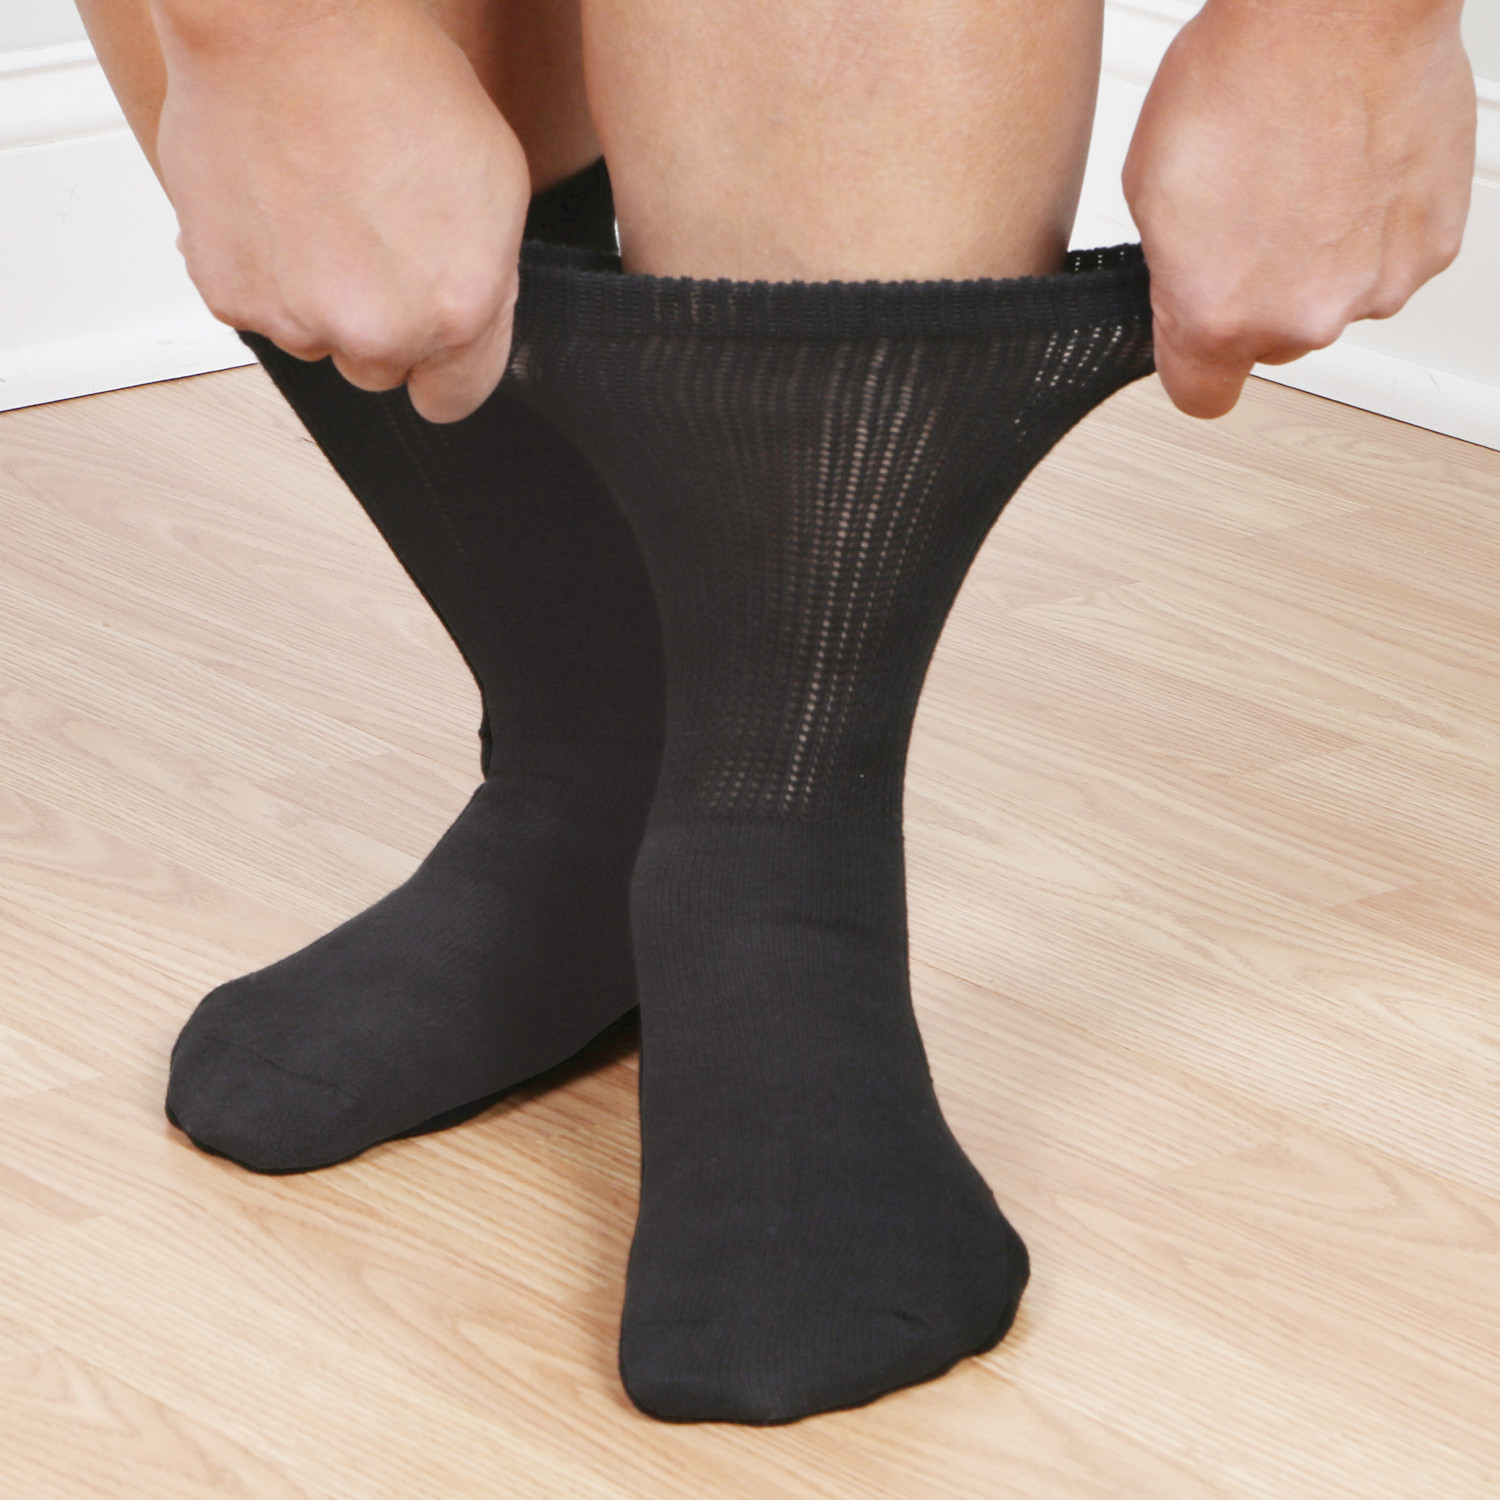 Buster Brown Men's Non-Binding Diabetic Crew Socks - 3 Pack | Support Plus